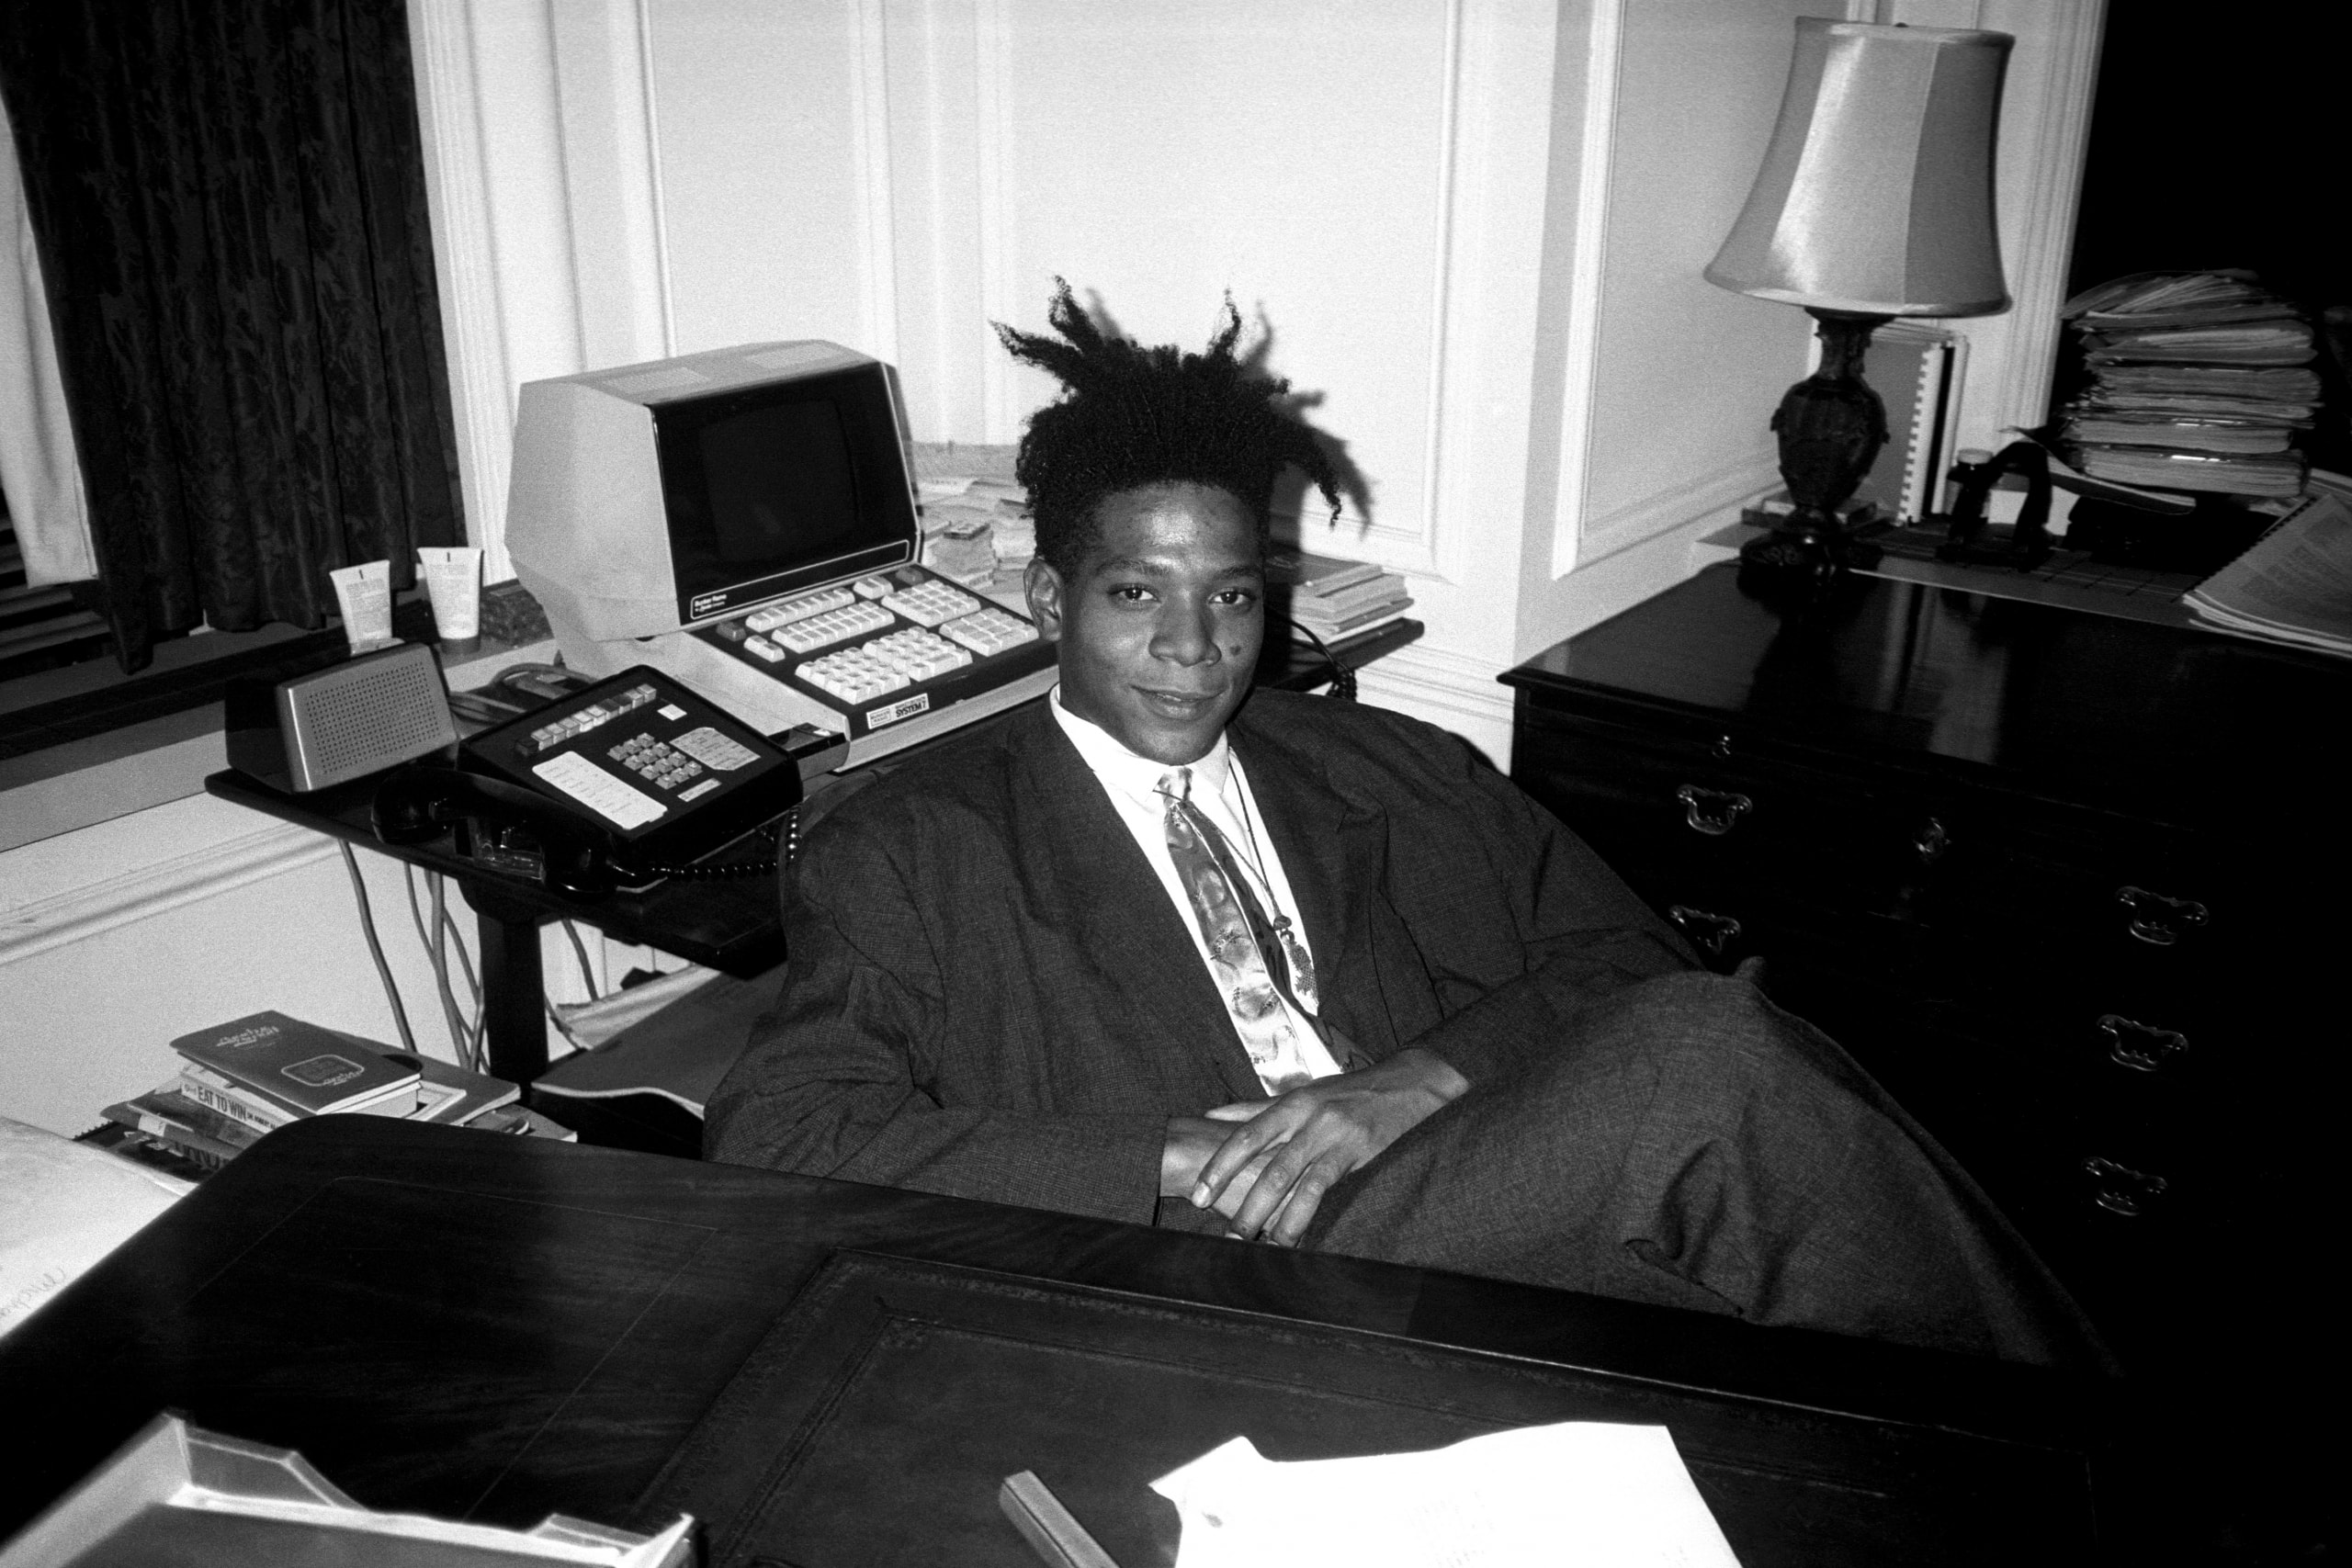 Jean-Michel Basquiat 的四个画作关键词，及其探索种族议题的八十年代